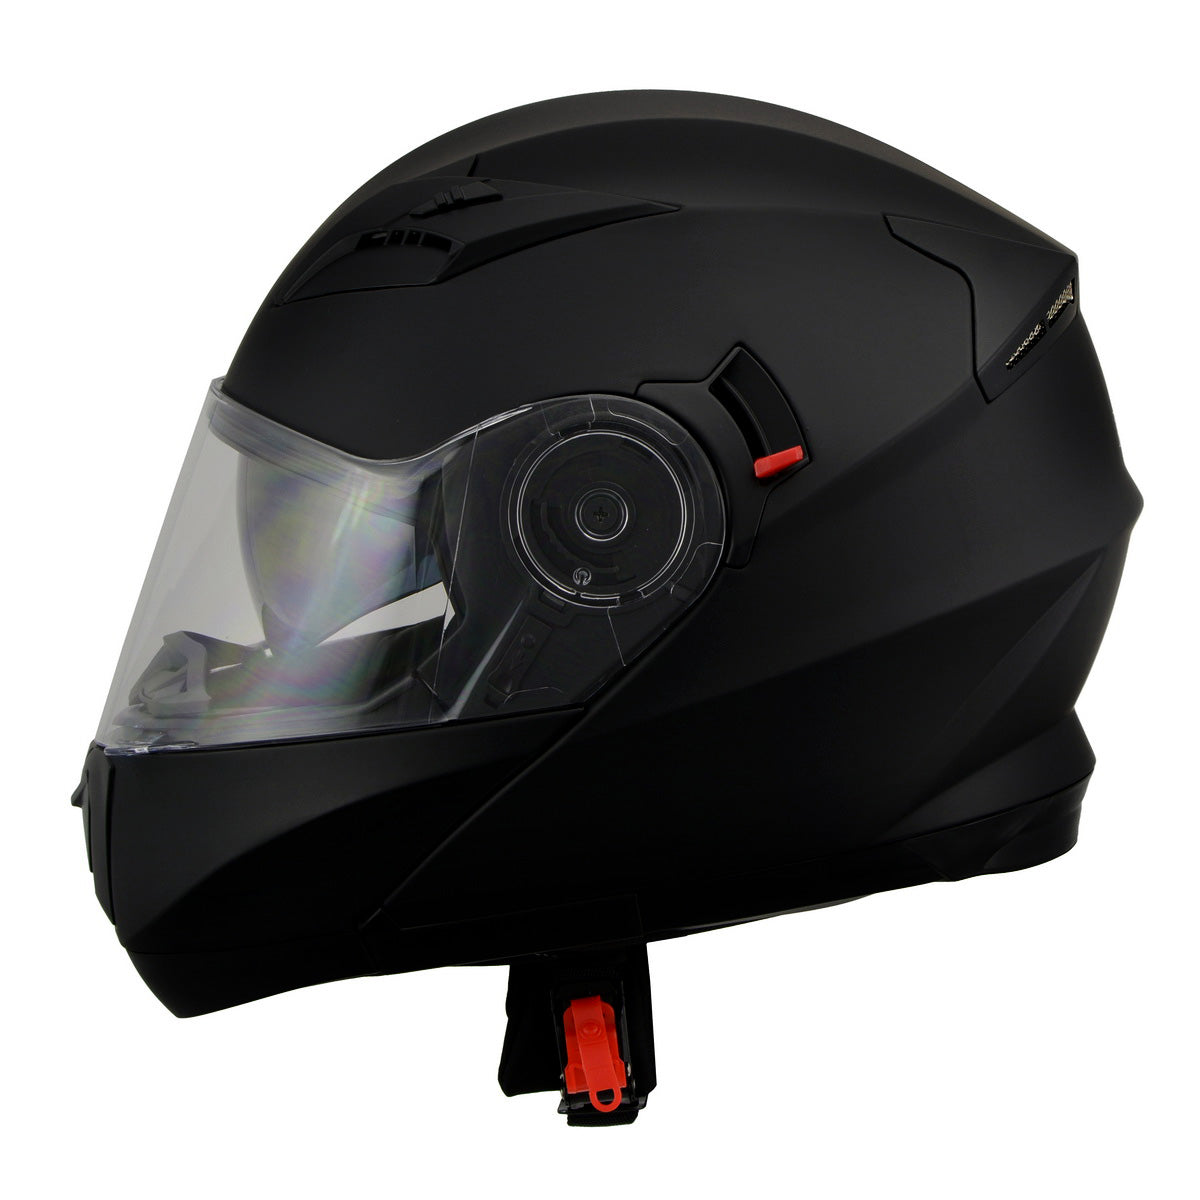 Milwaukee Performance Helmets MPH9803DOT 'Ionized' Matte Black Advanced Modular Motorcycle Helmet with Drop Down Visor